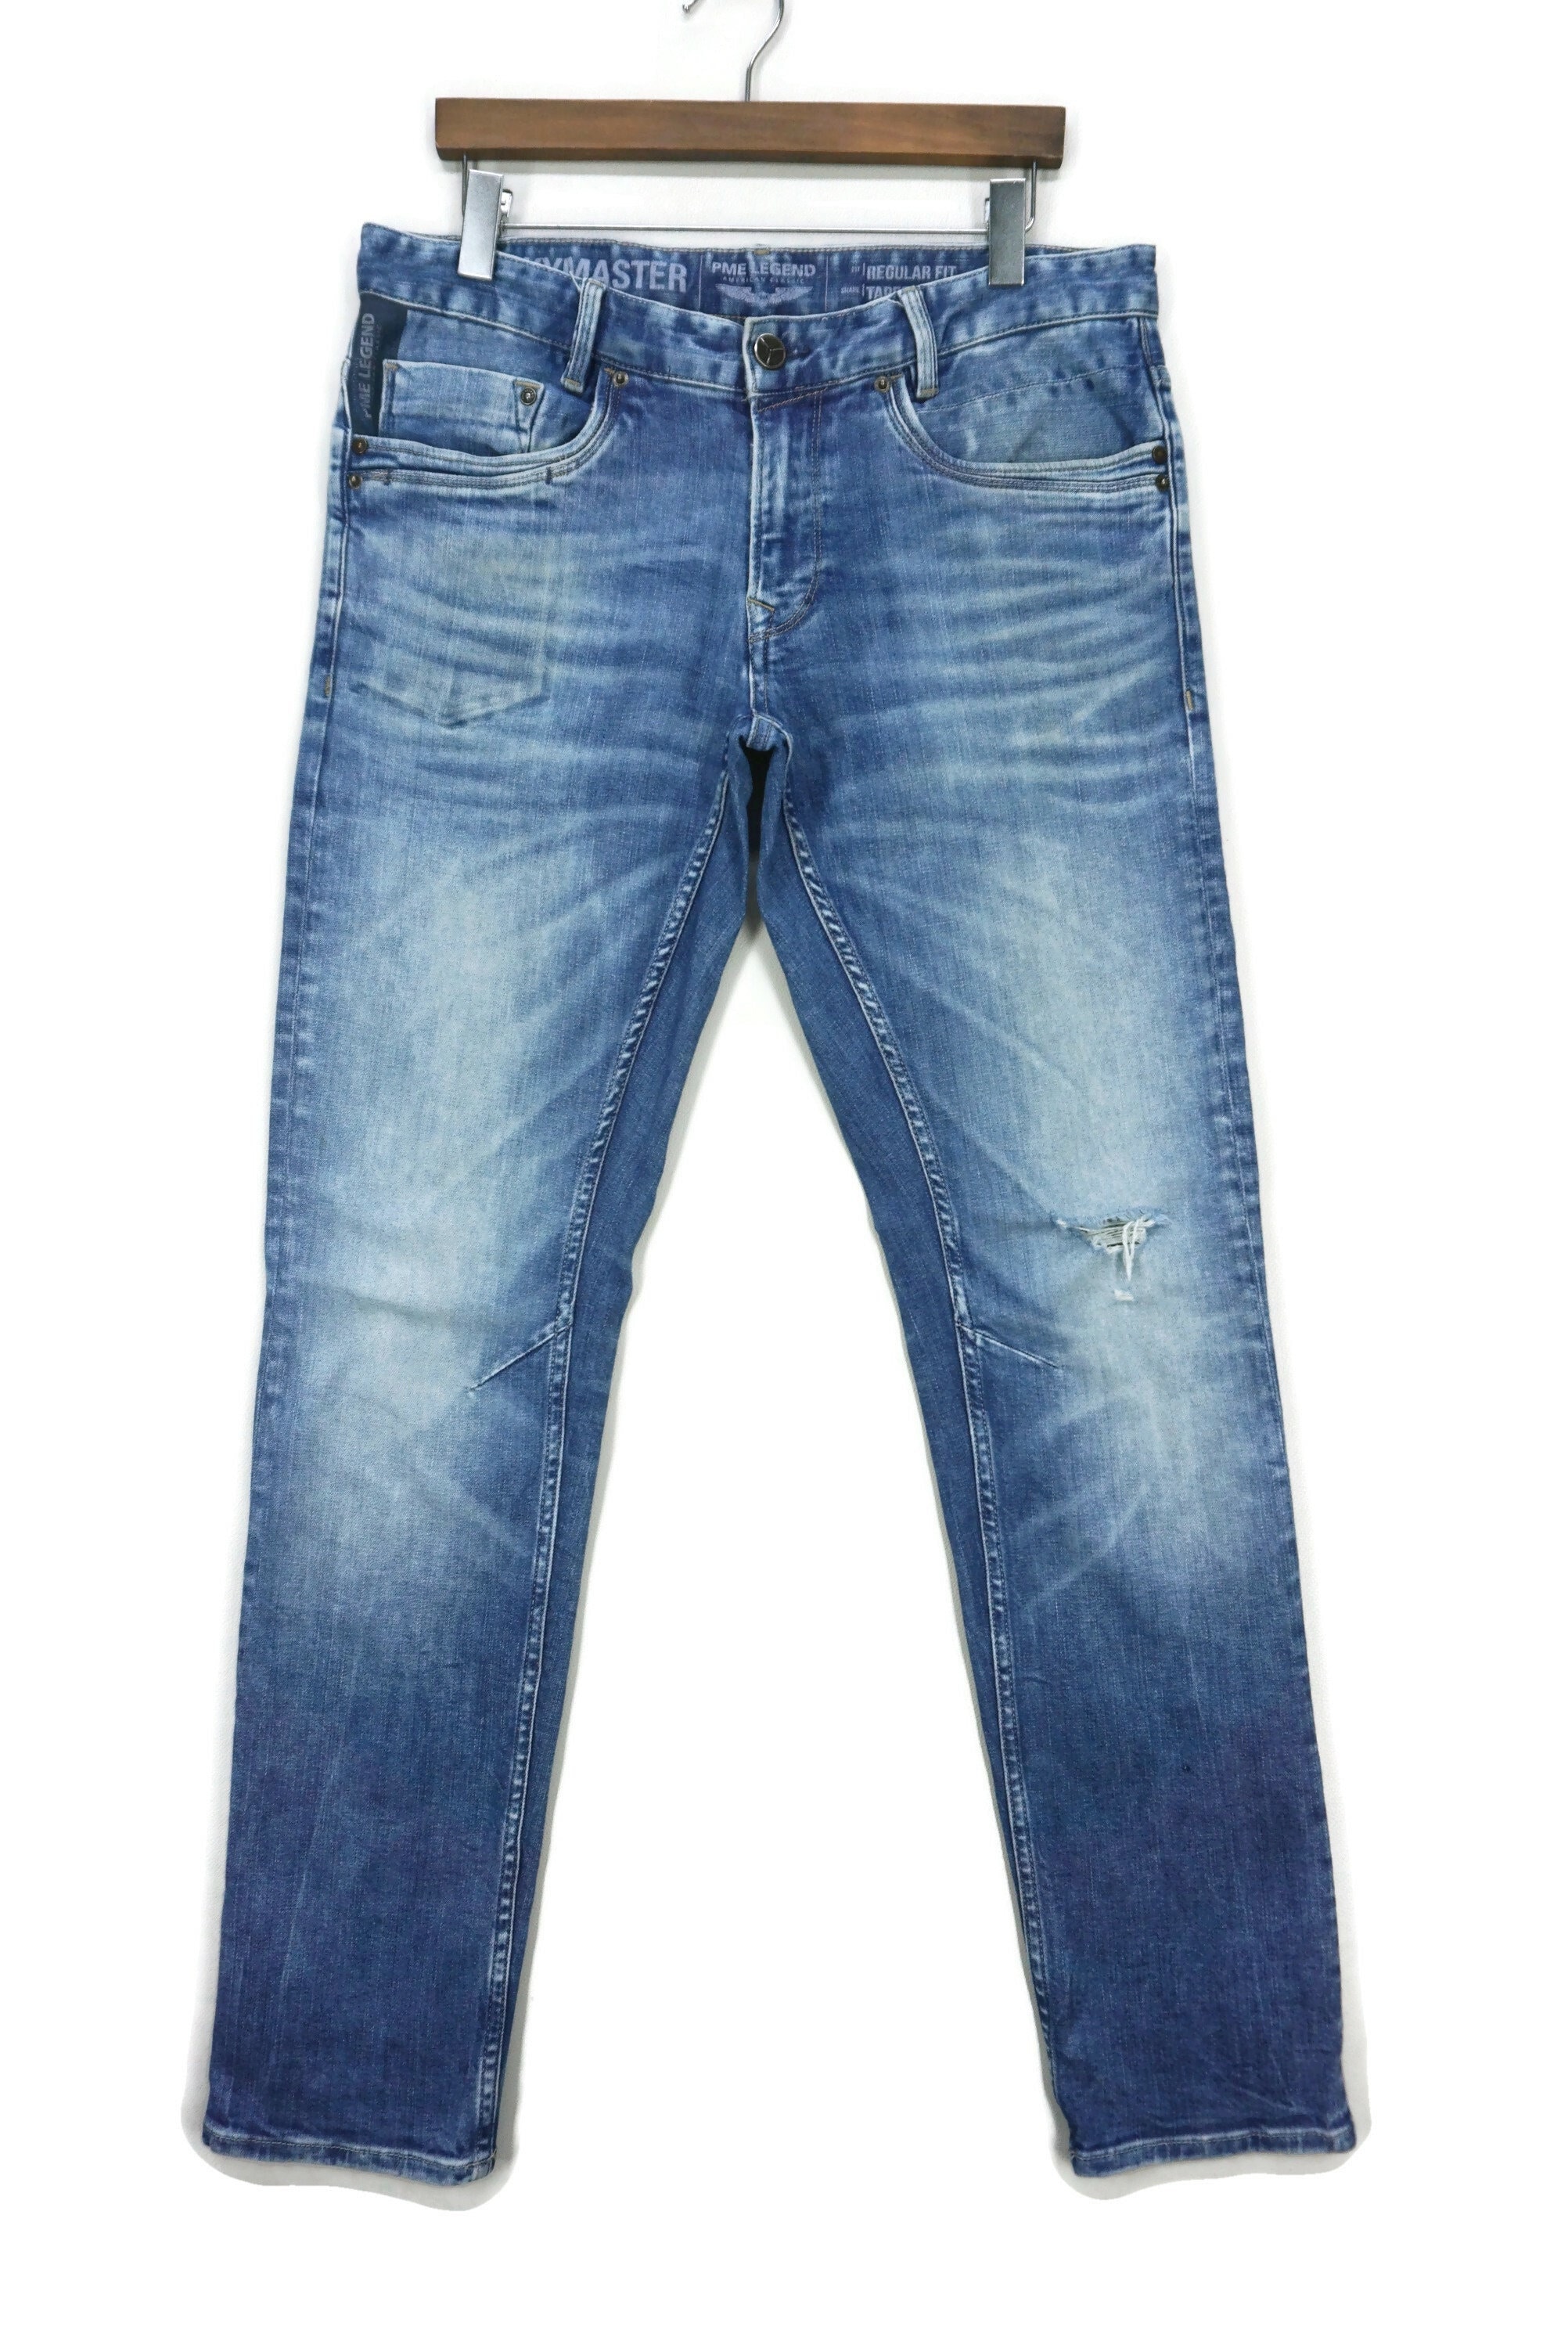 Riskeren Afwijken belegd broodje PME Legend Jeans Size 33 W36xl34.5 PME Sky Master Regular Fit - Etsy